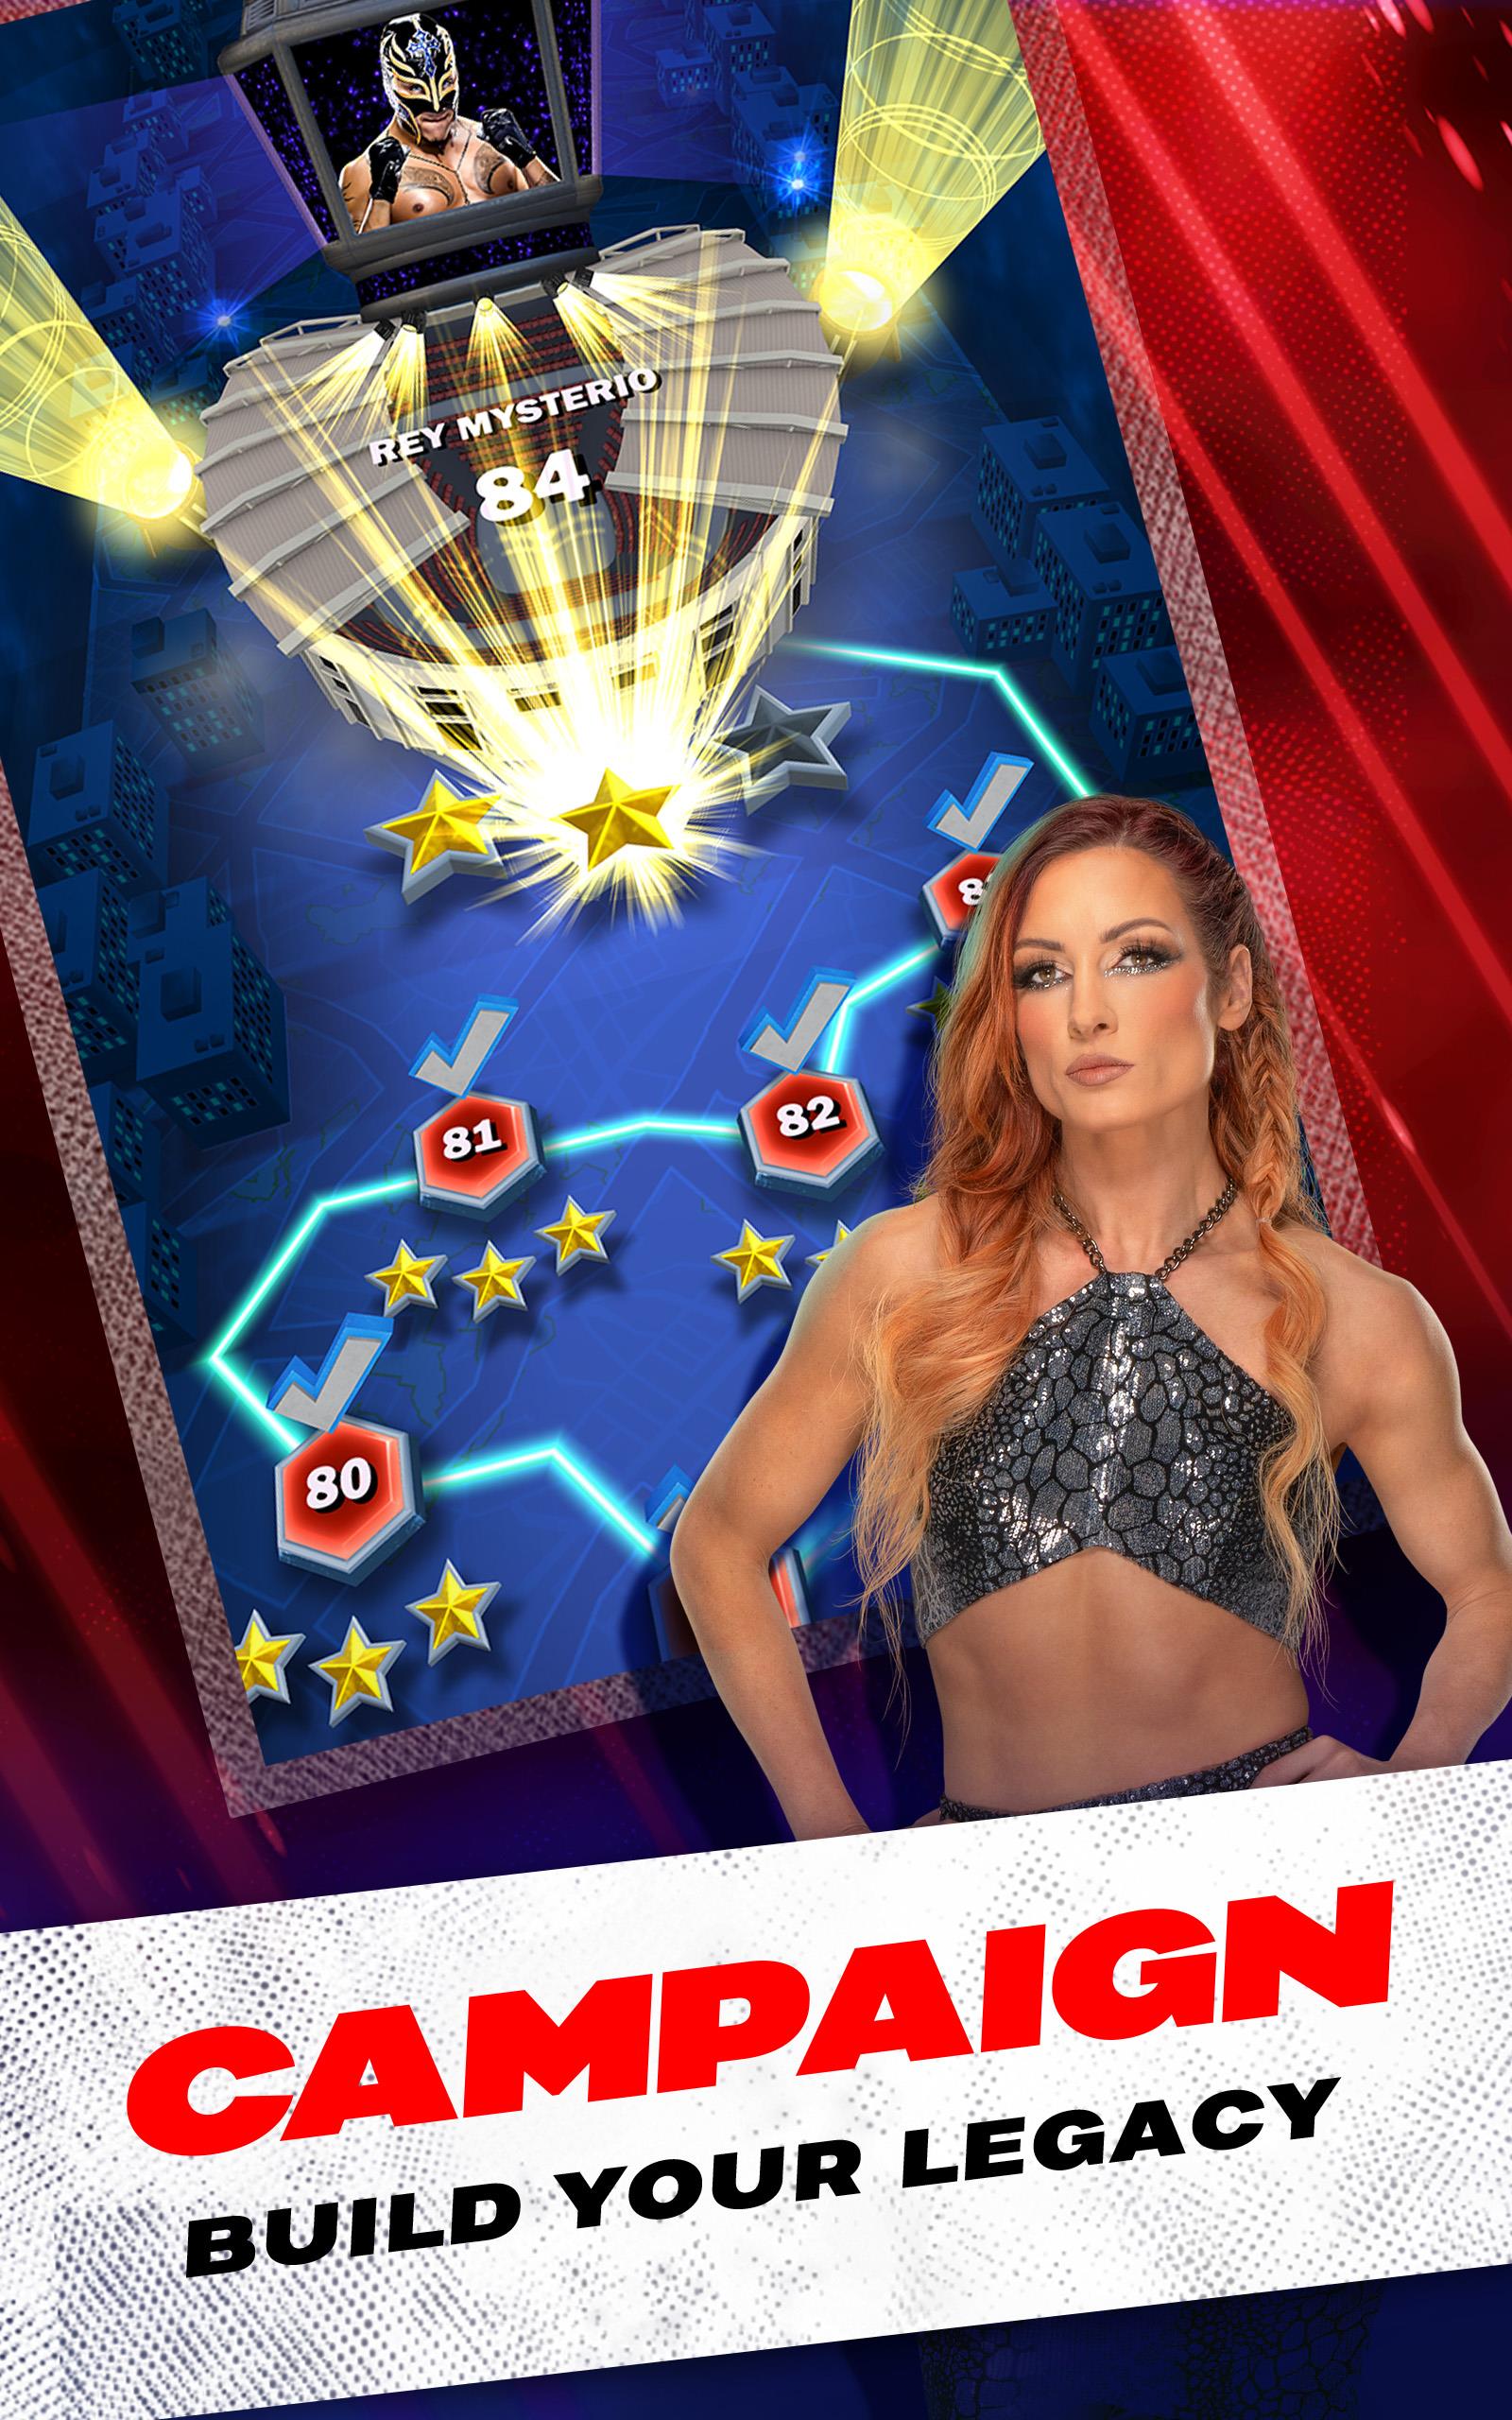 WWE SuperCard - Battle Cards Screenshot 21